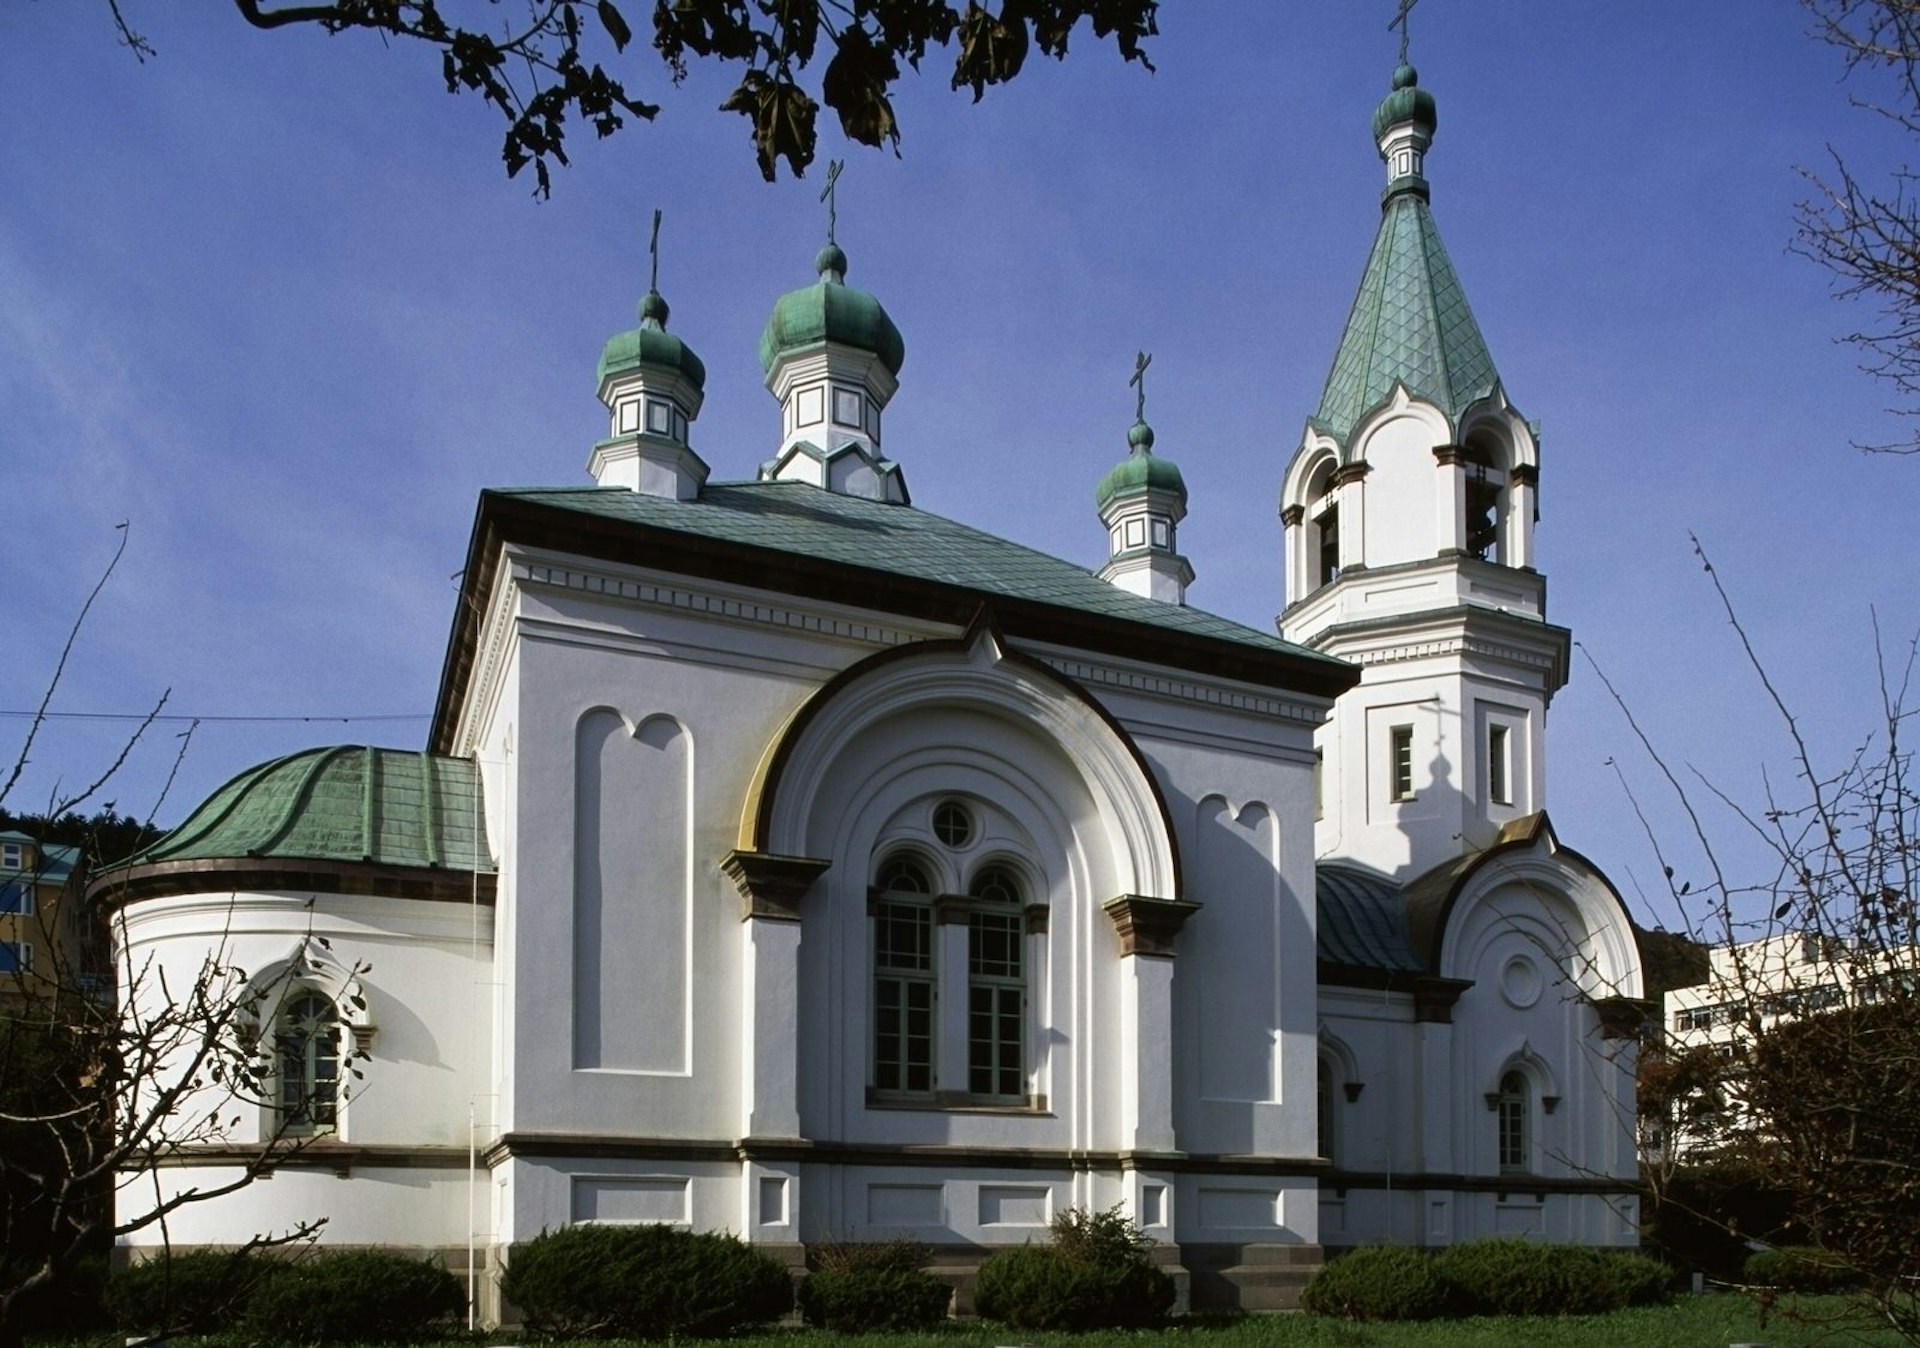 The Russian Orthodox church (1916), Motomachi district, Hakodate, Hokkaido, Japan.